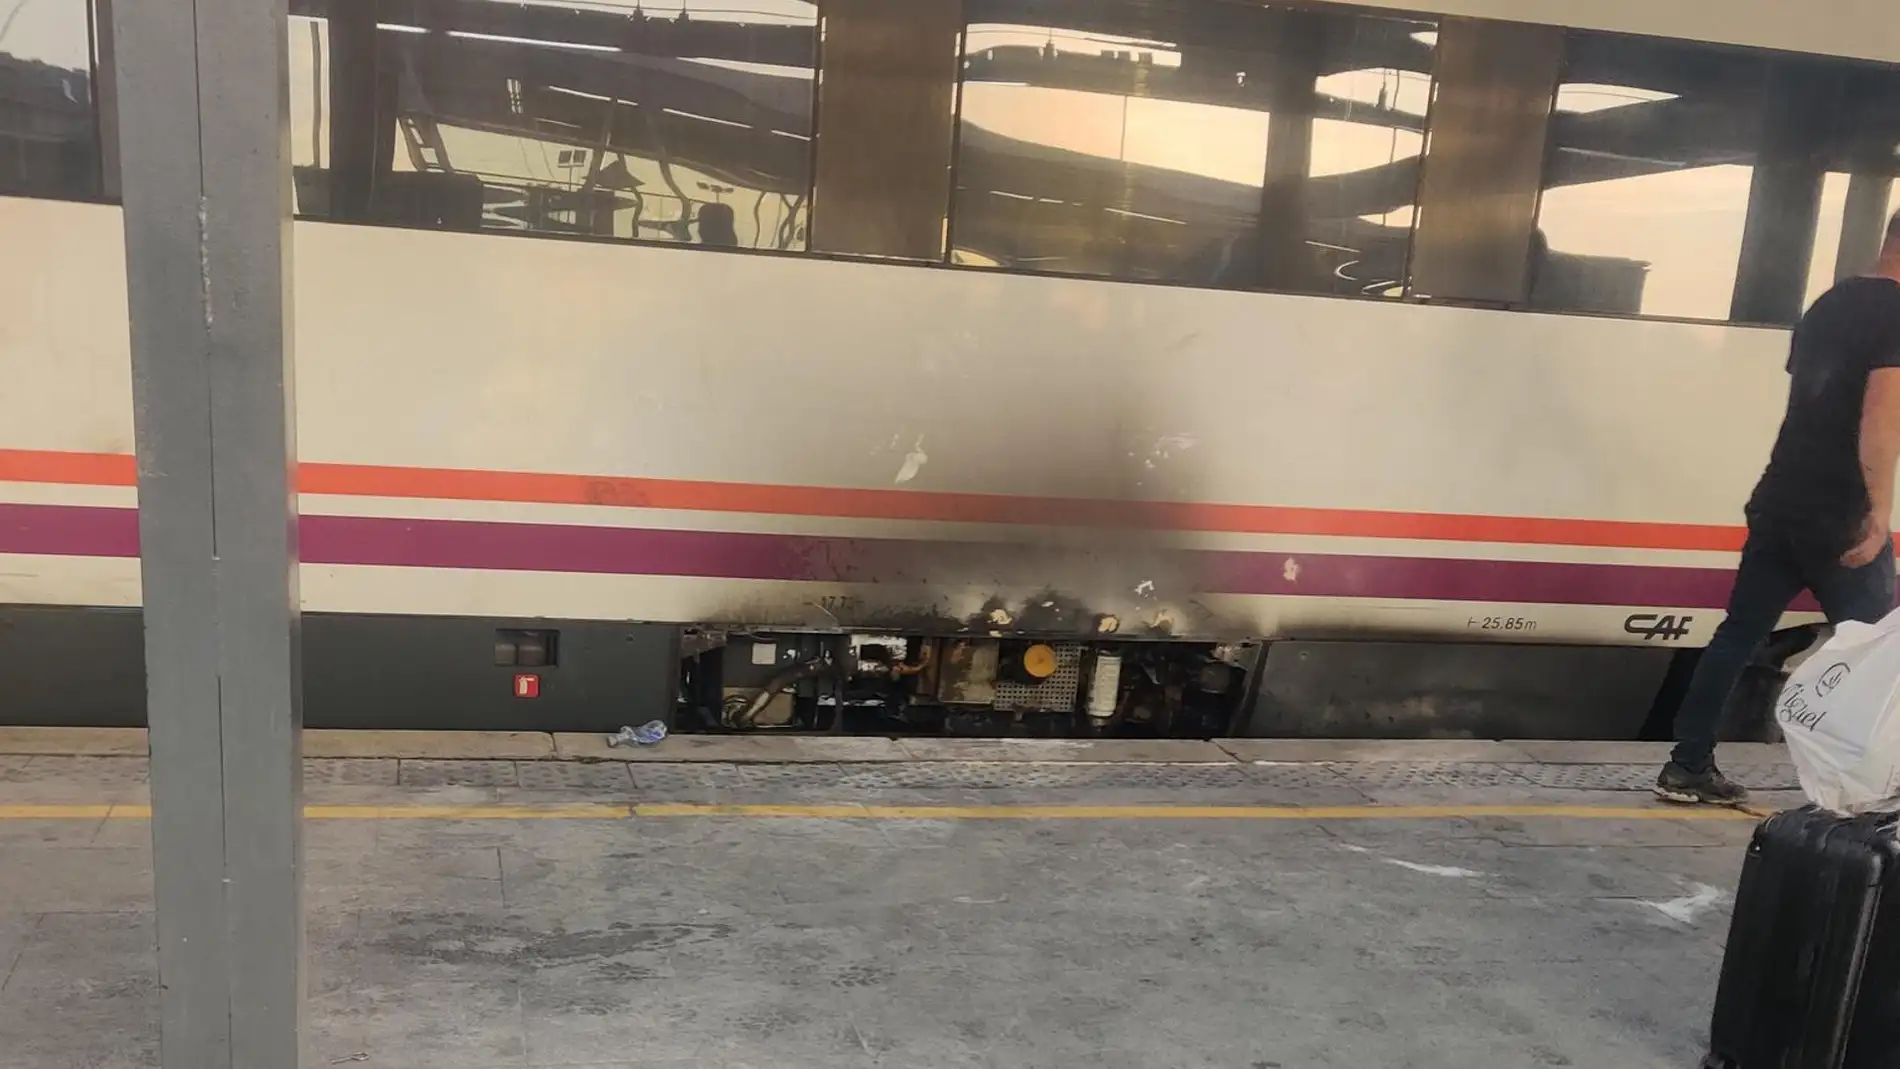 166 pasajeros del tren Madrid-Cáceres transbordados tras sufrir un incendio el tren en que viajaban en Leganés